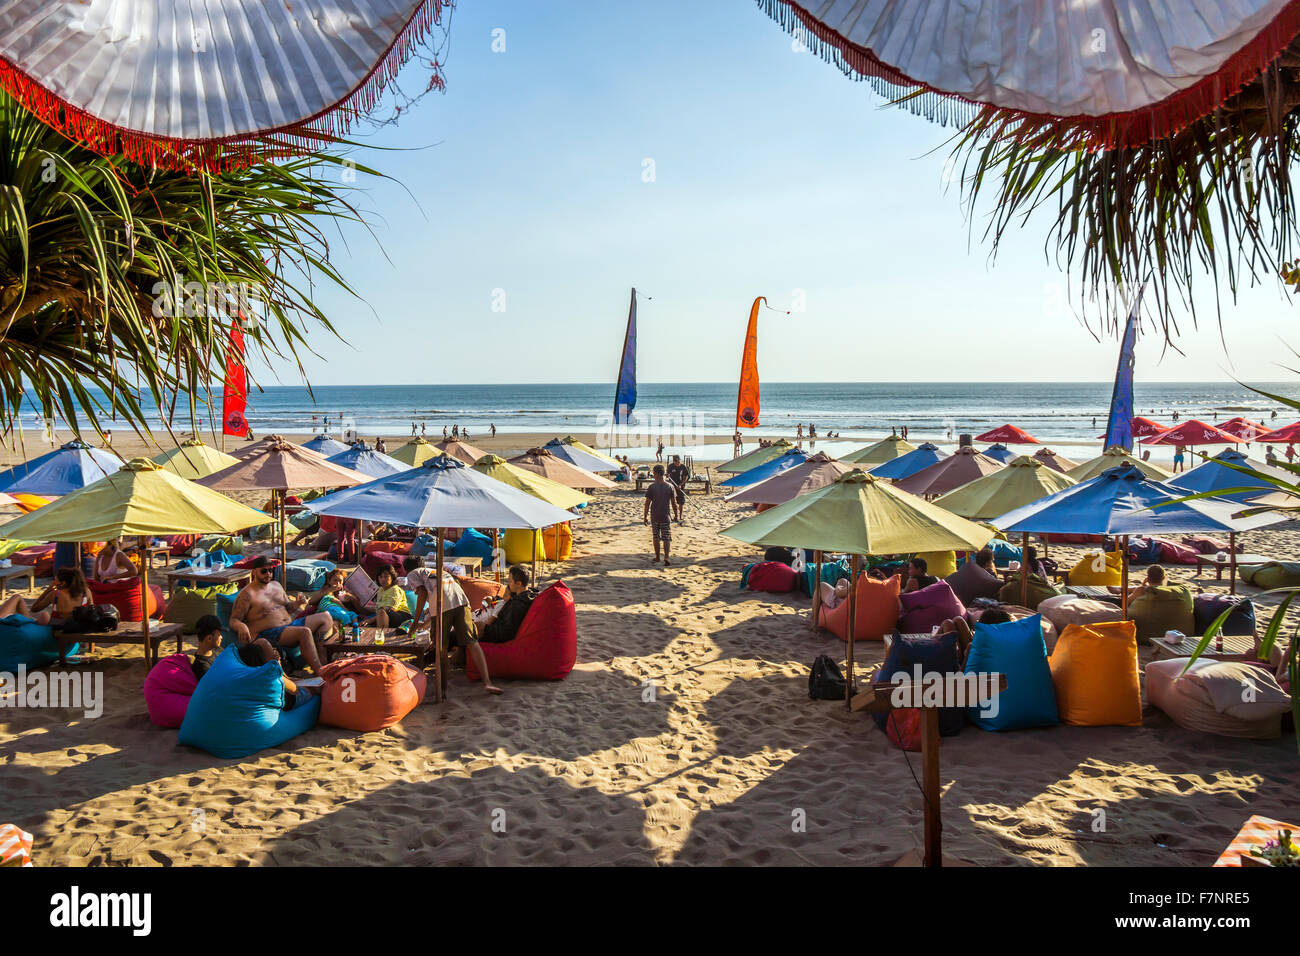 Indonesia, Bali, Denpasar, Tourists under colorful sunshades at Kuta beach Stock Photo